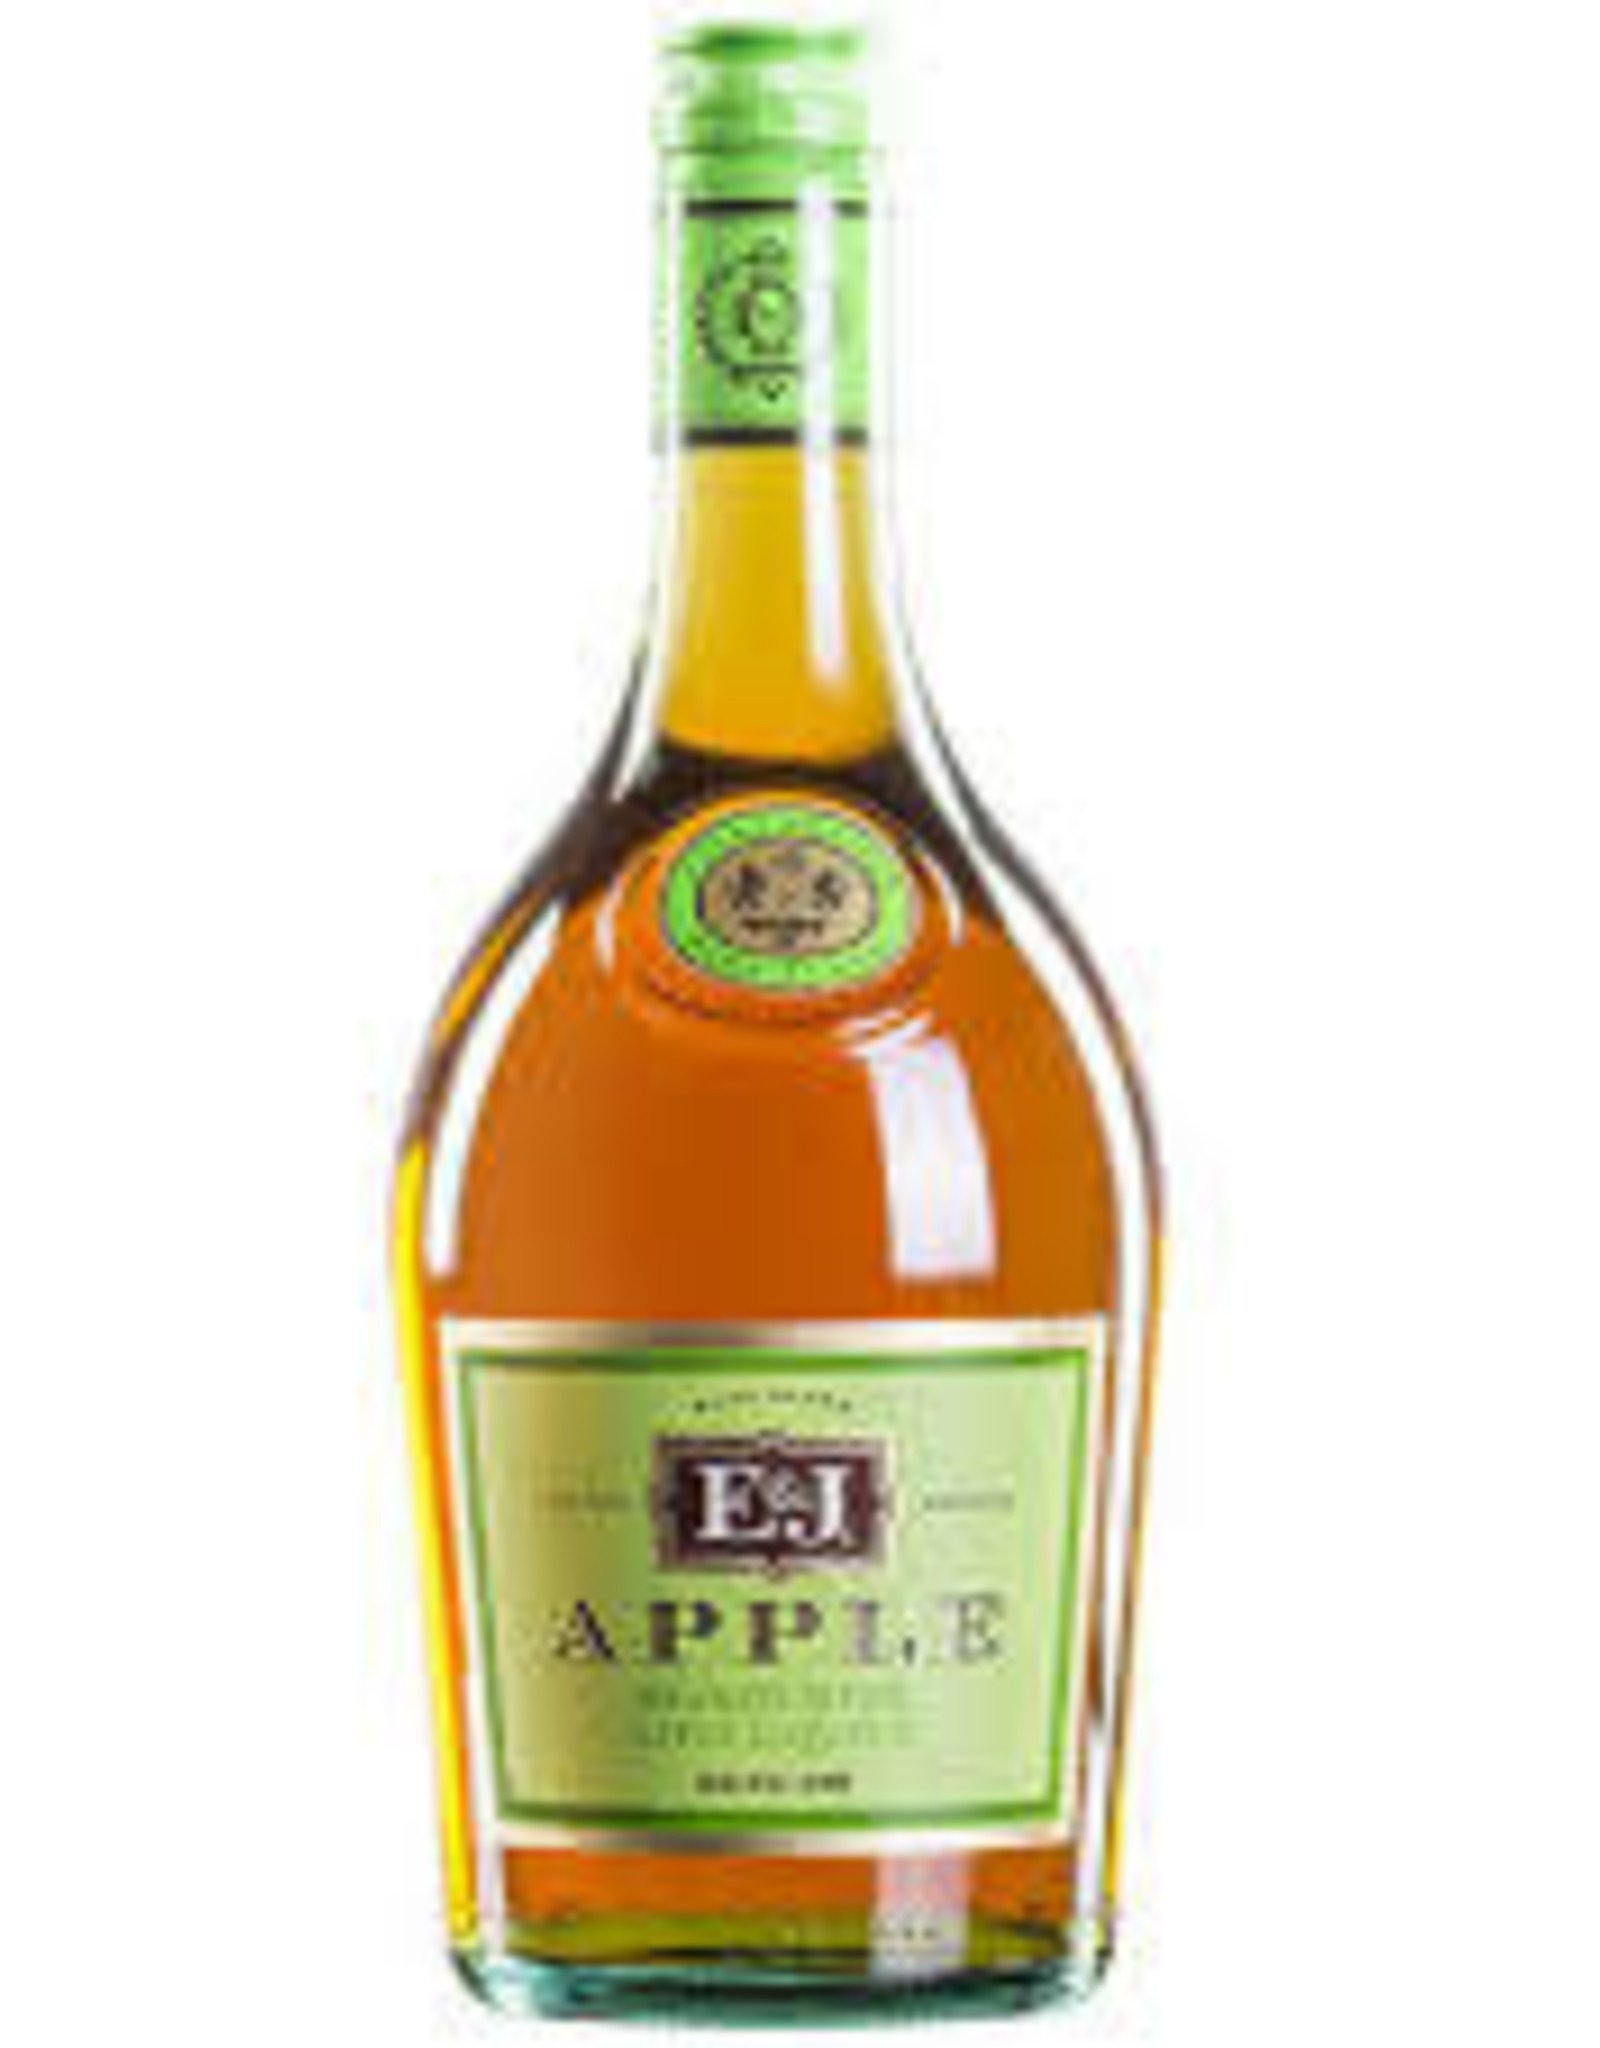 E&J E&J Apple Brandy